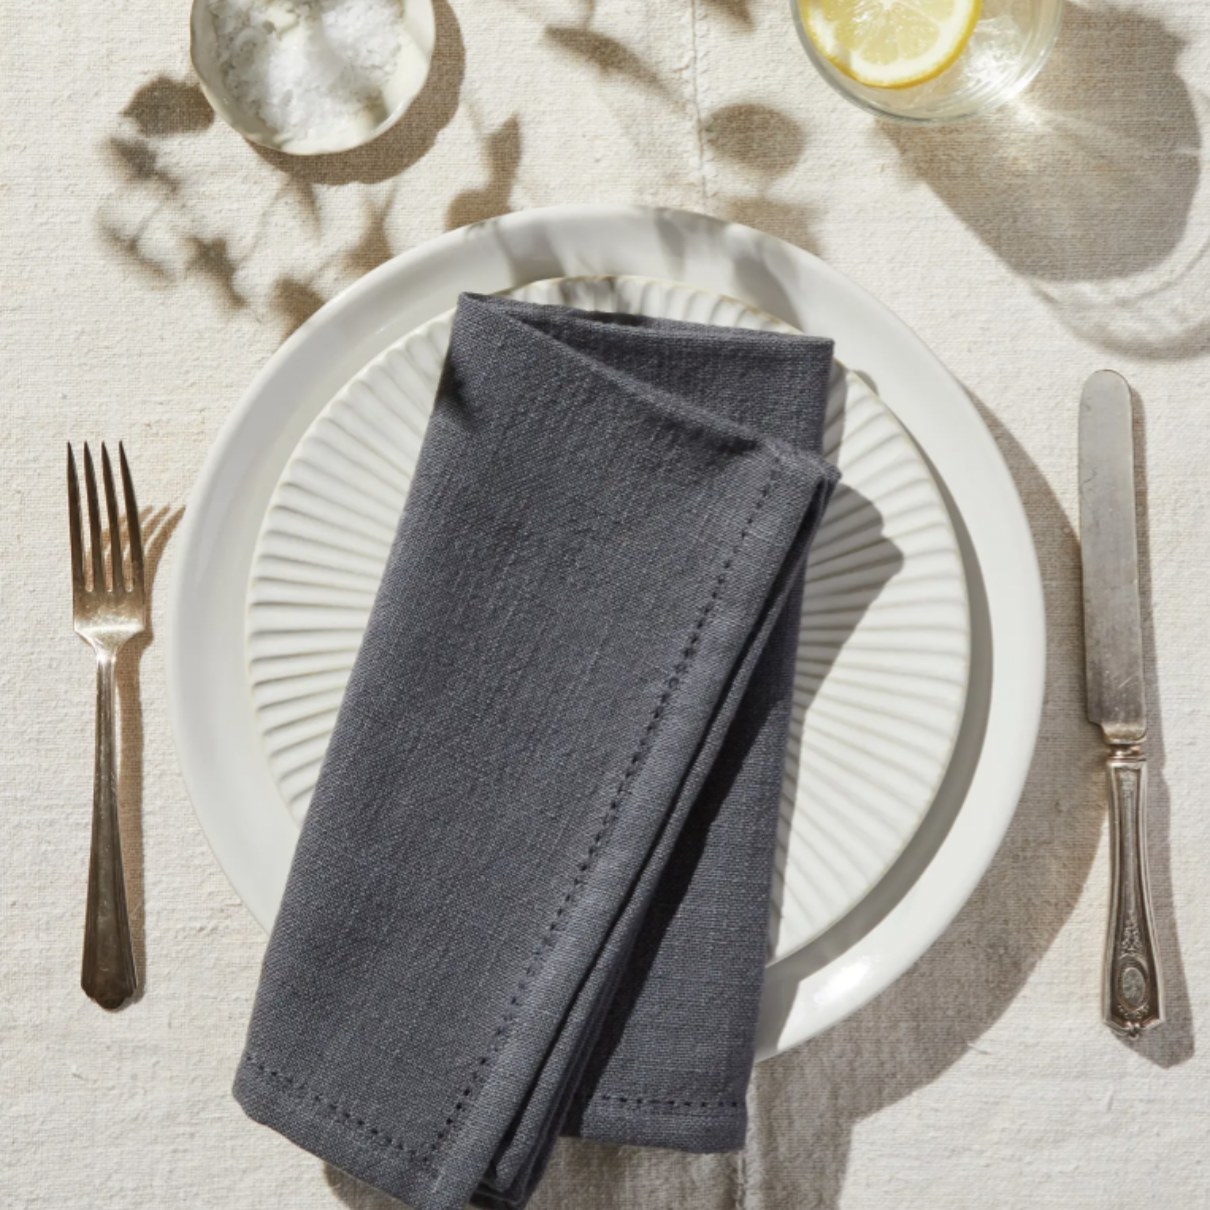 a grey cotton napkin folded over a plate set up